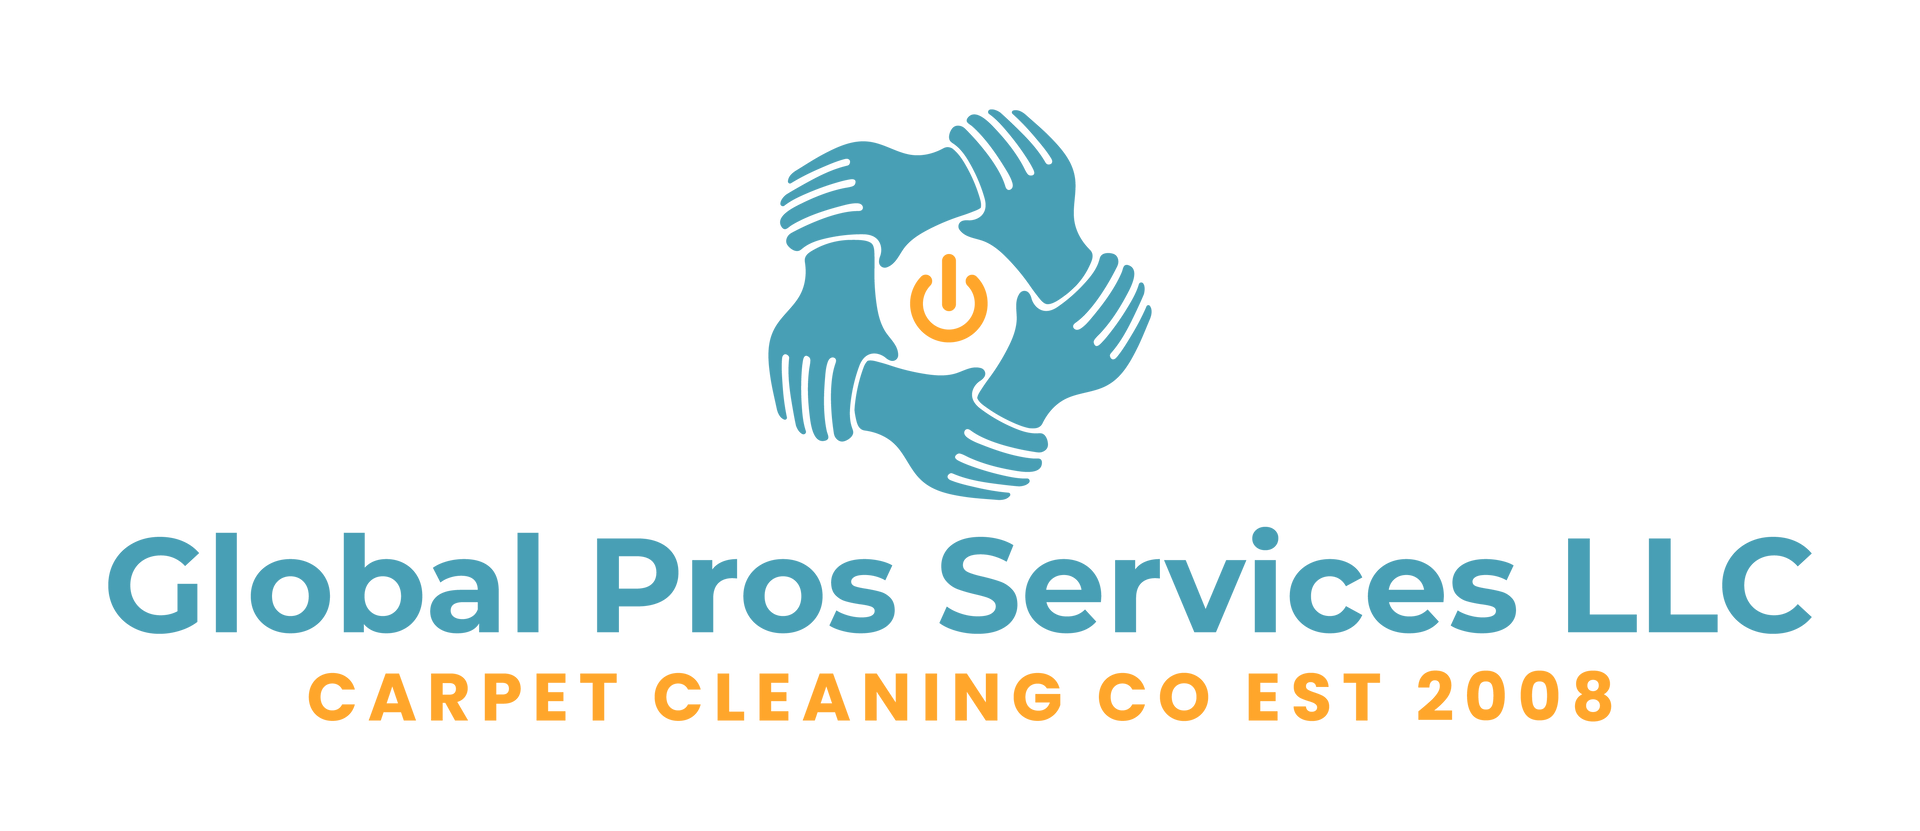 Global Pros Services LLC